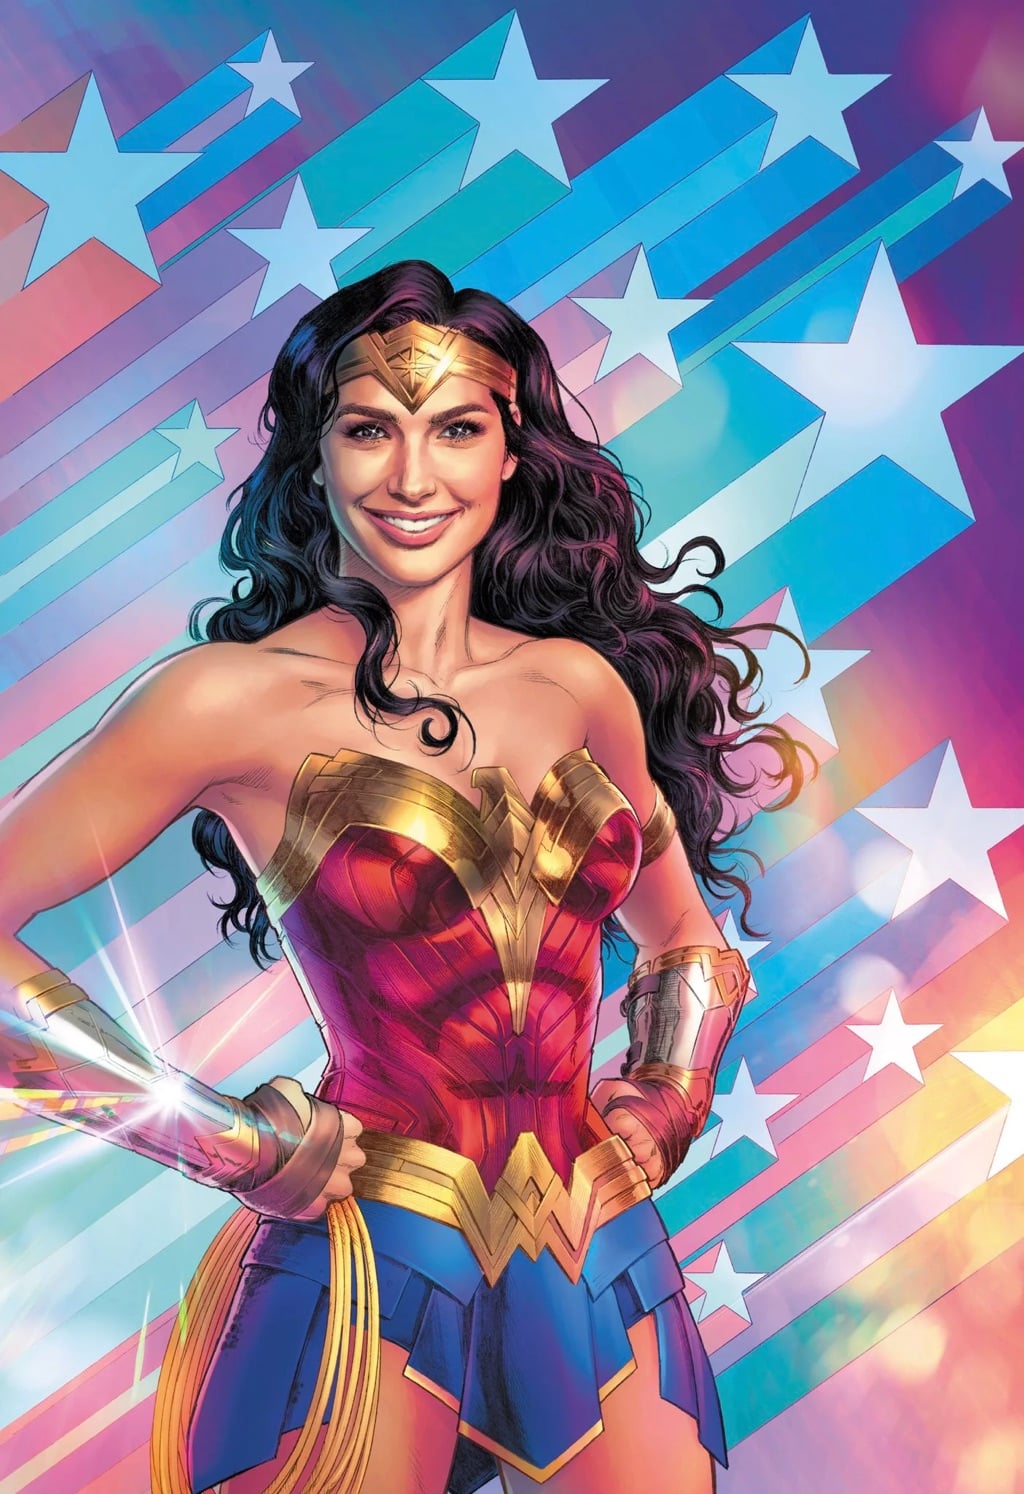 Power Posing: Does Wonder Woman Work?